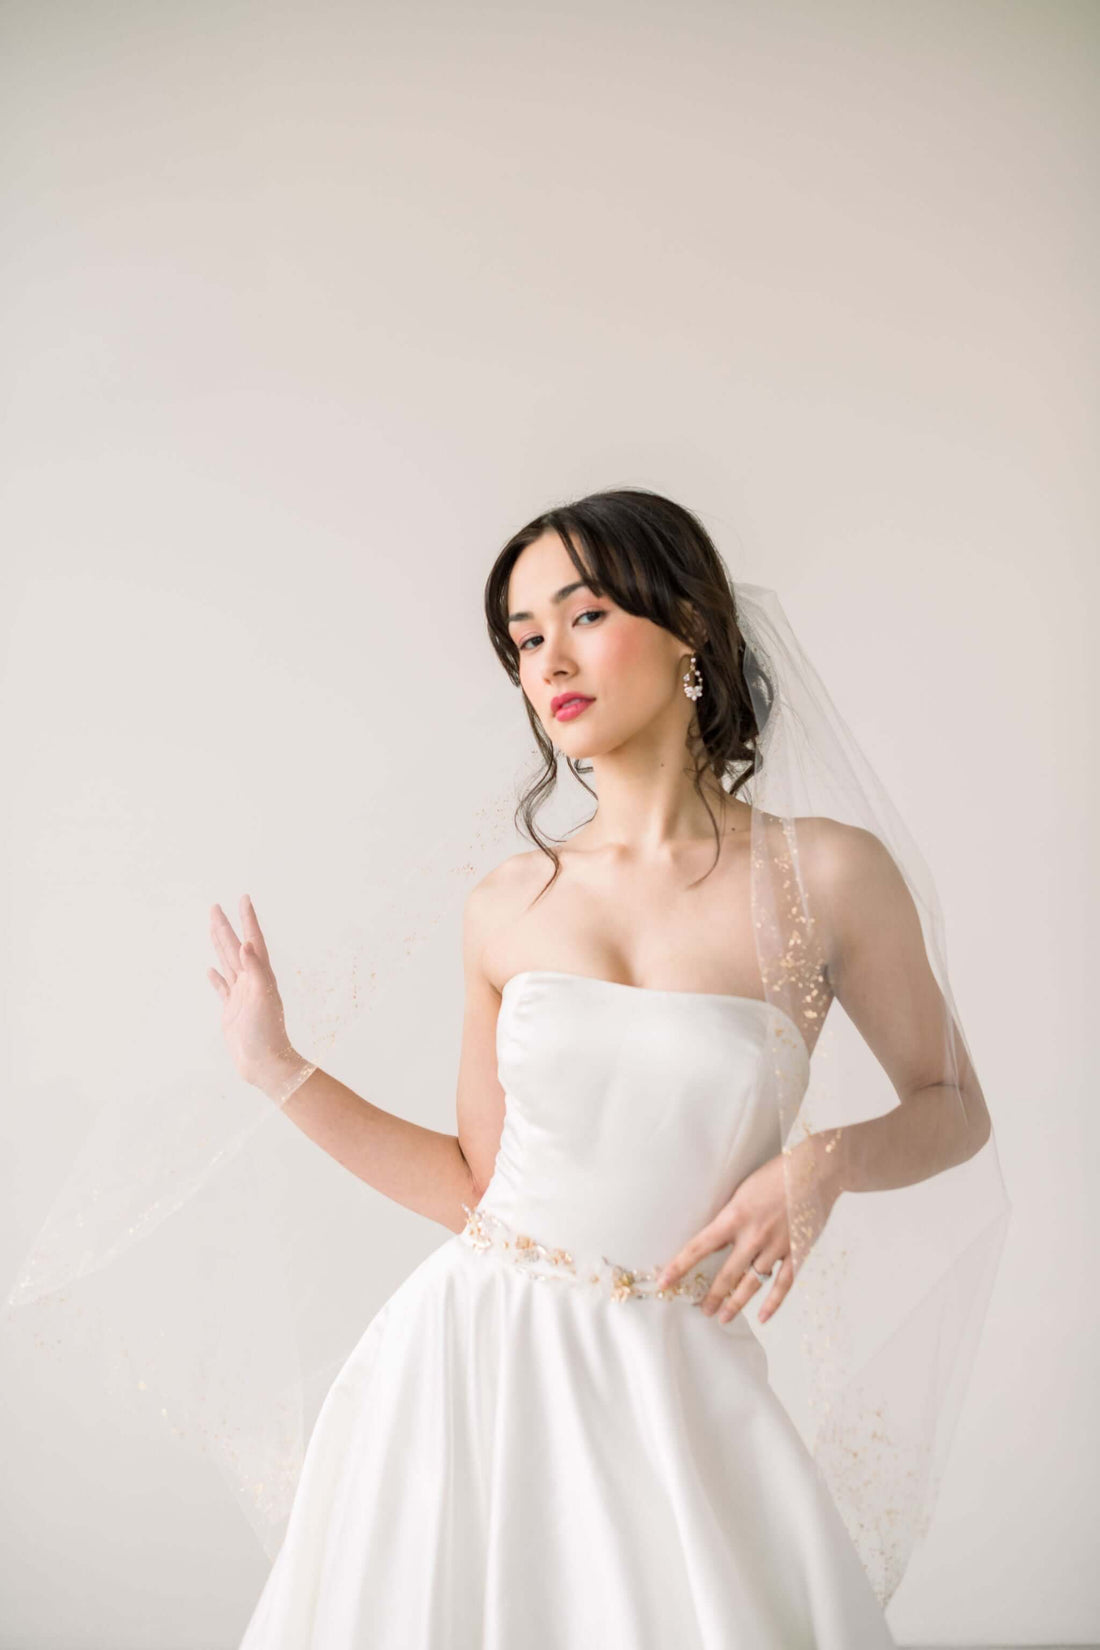 Should I wear a sash with my wedding dress? Tessa Kim